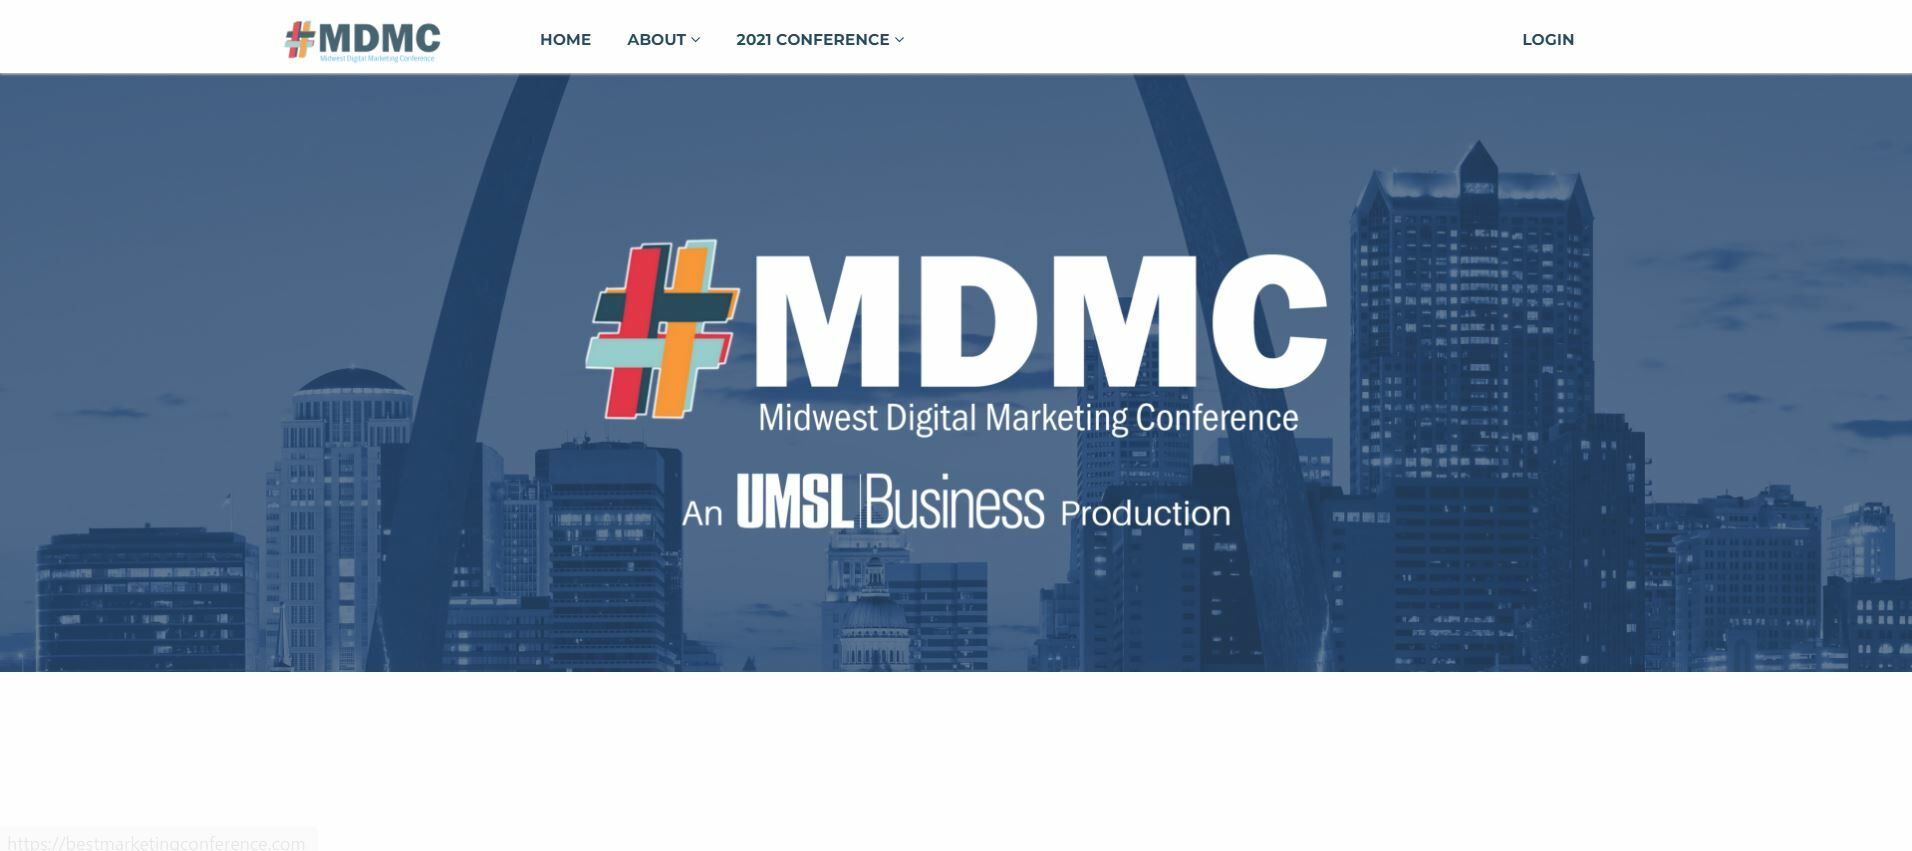 Midwest Digital Marketing Conference (MDMC).